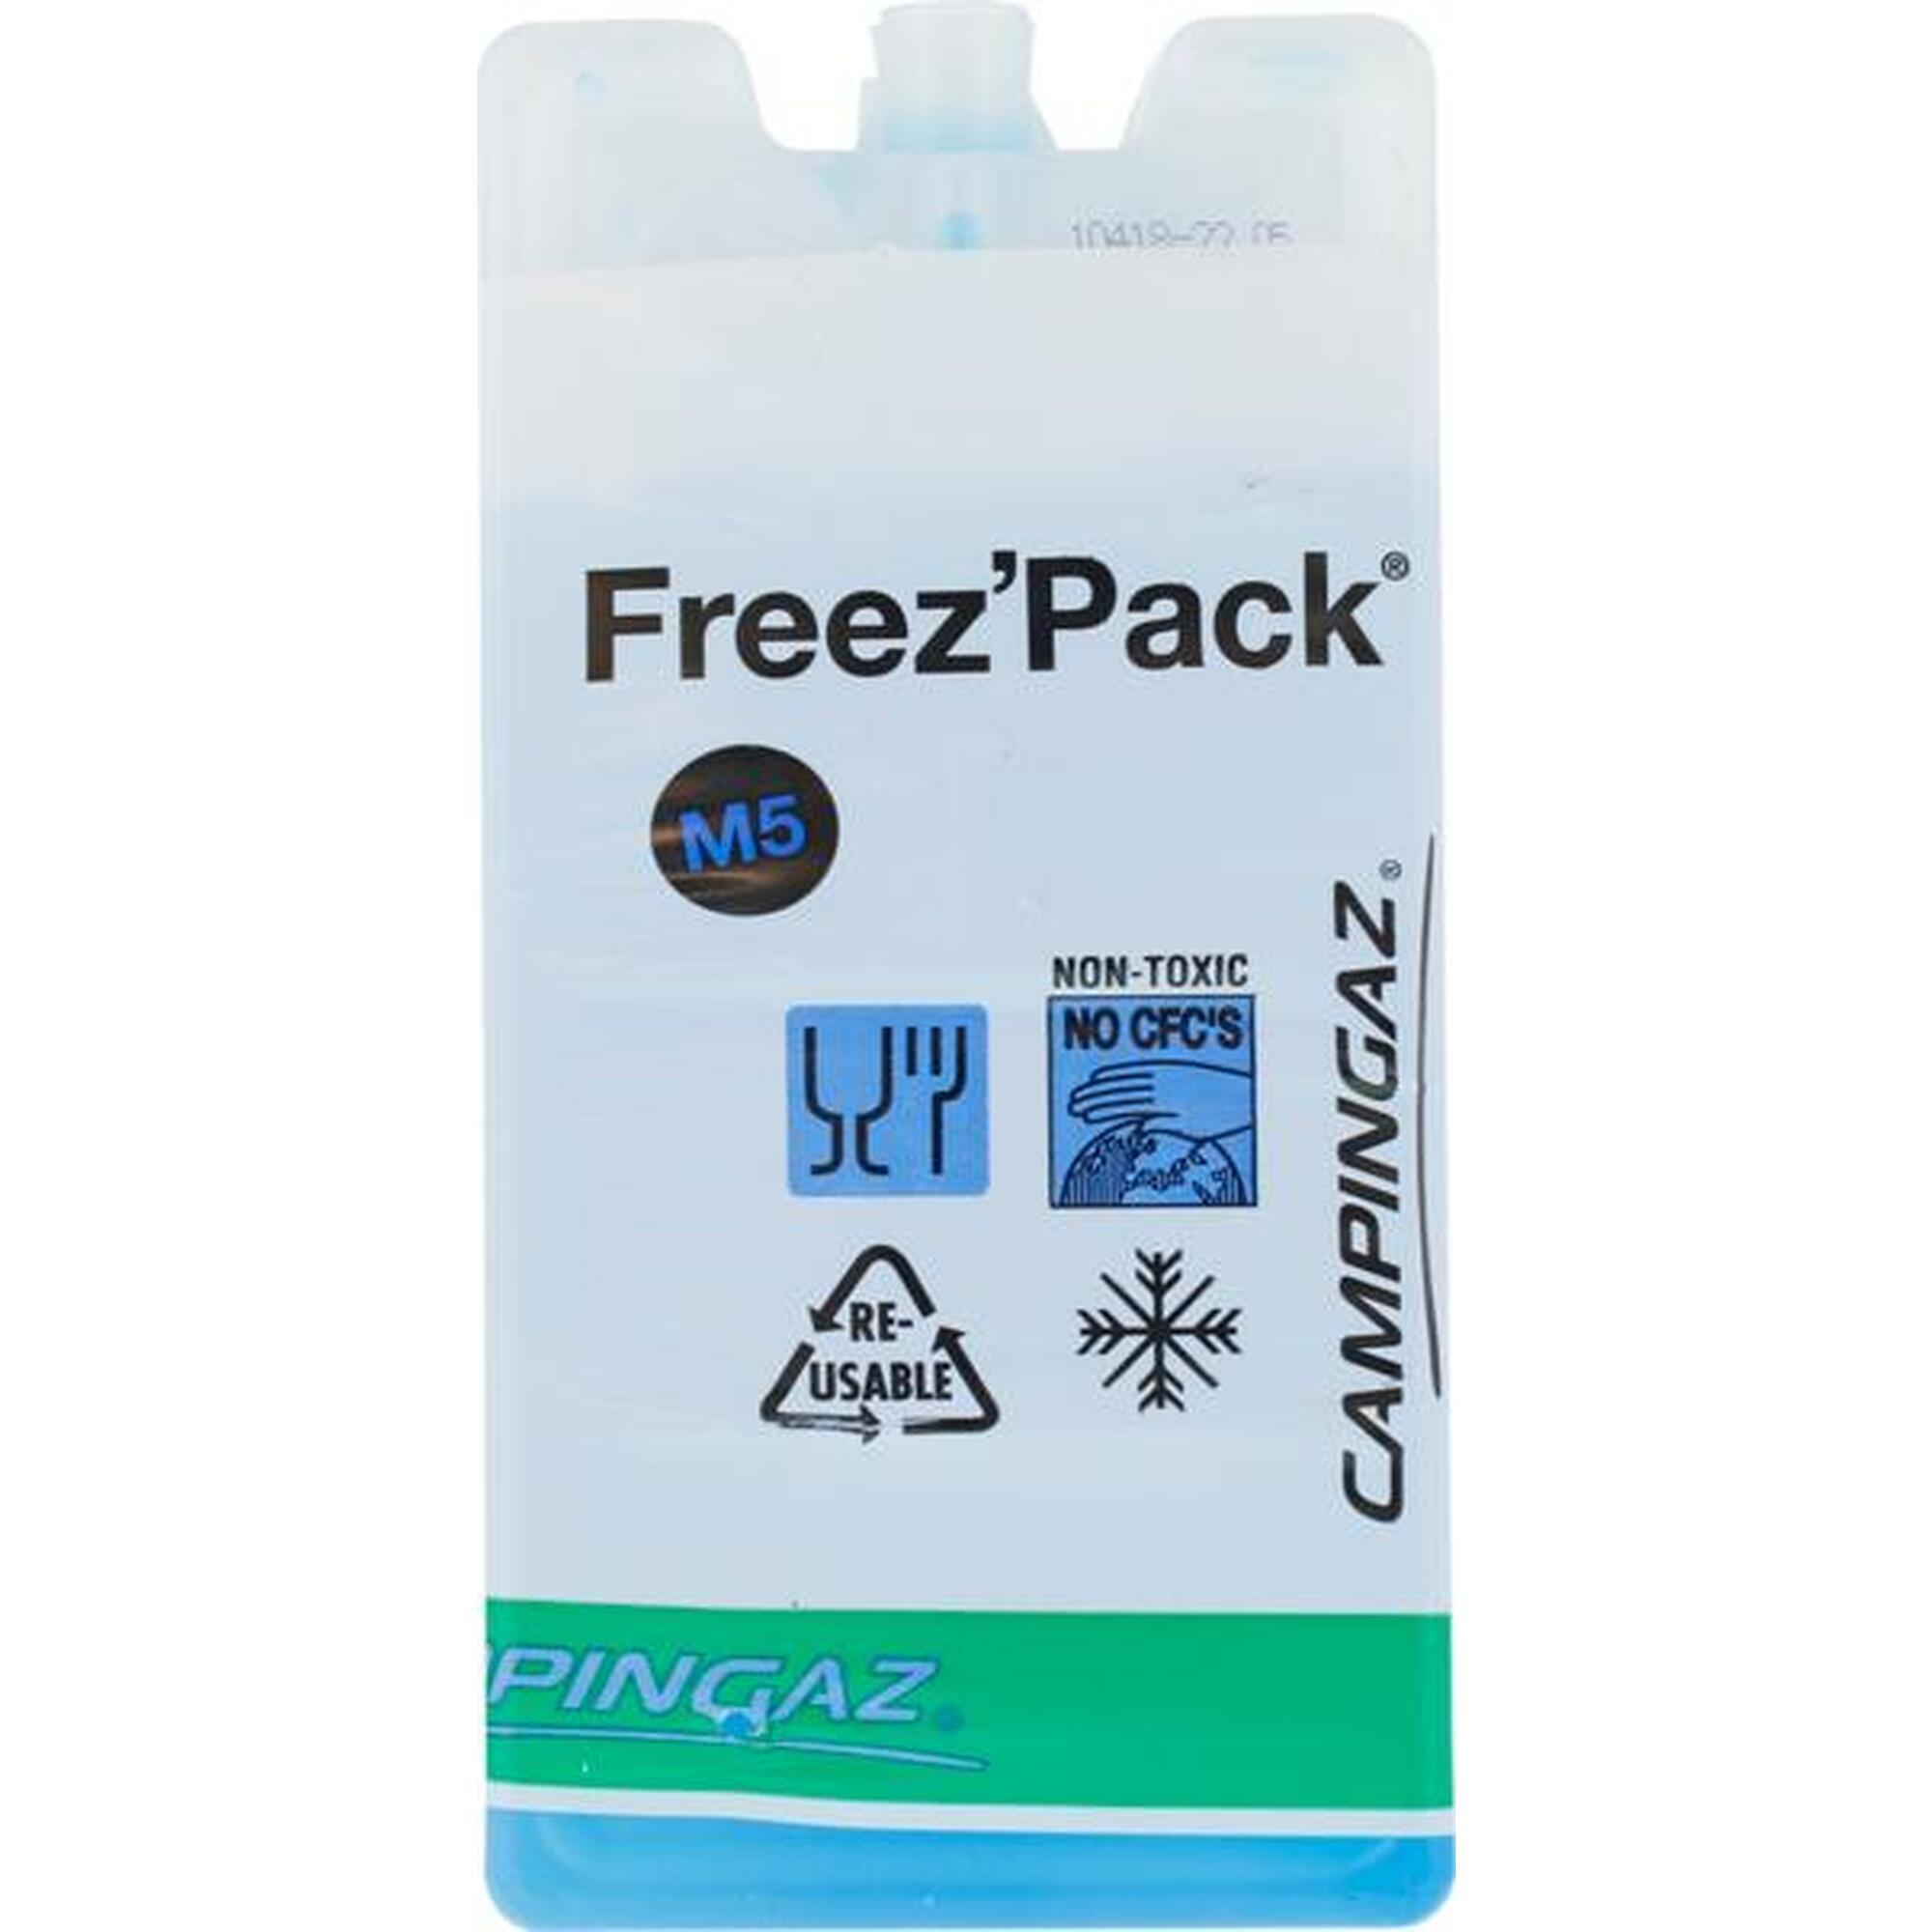 Campingaz - Campingaz - Campingaz Freez Pack M5 koelelementen